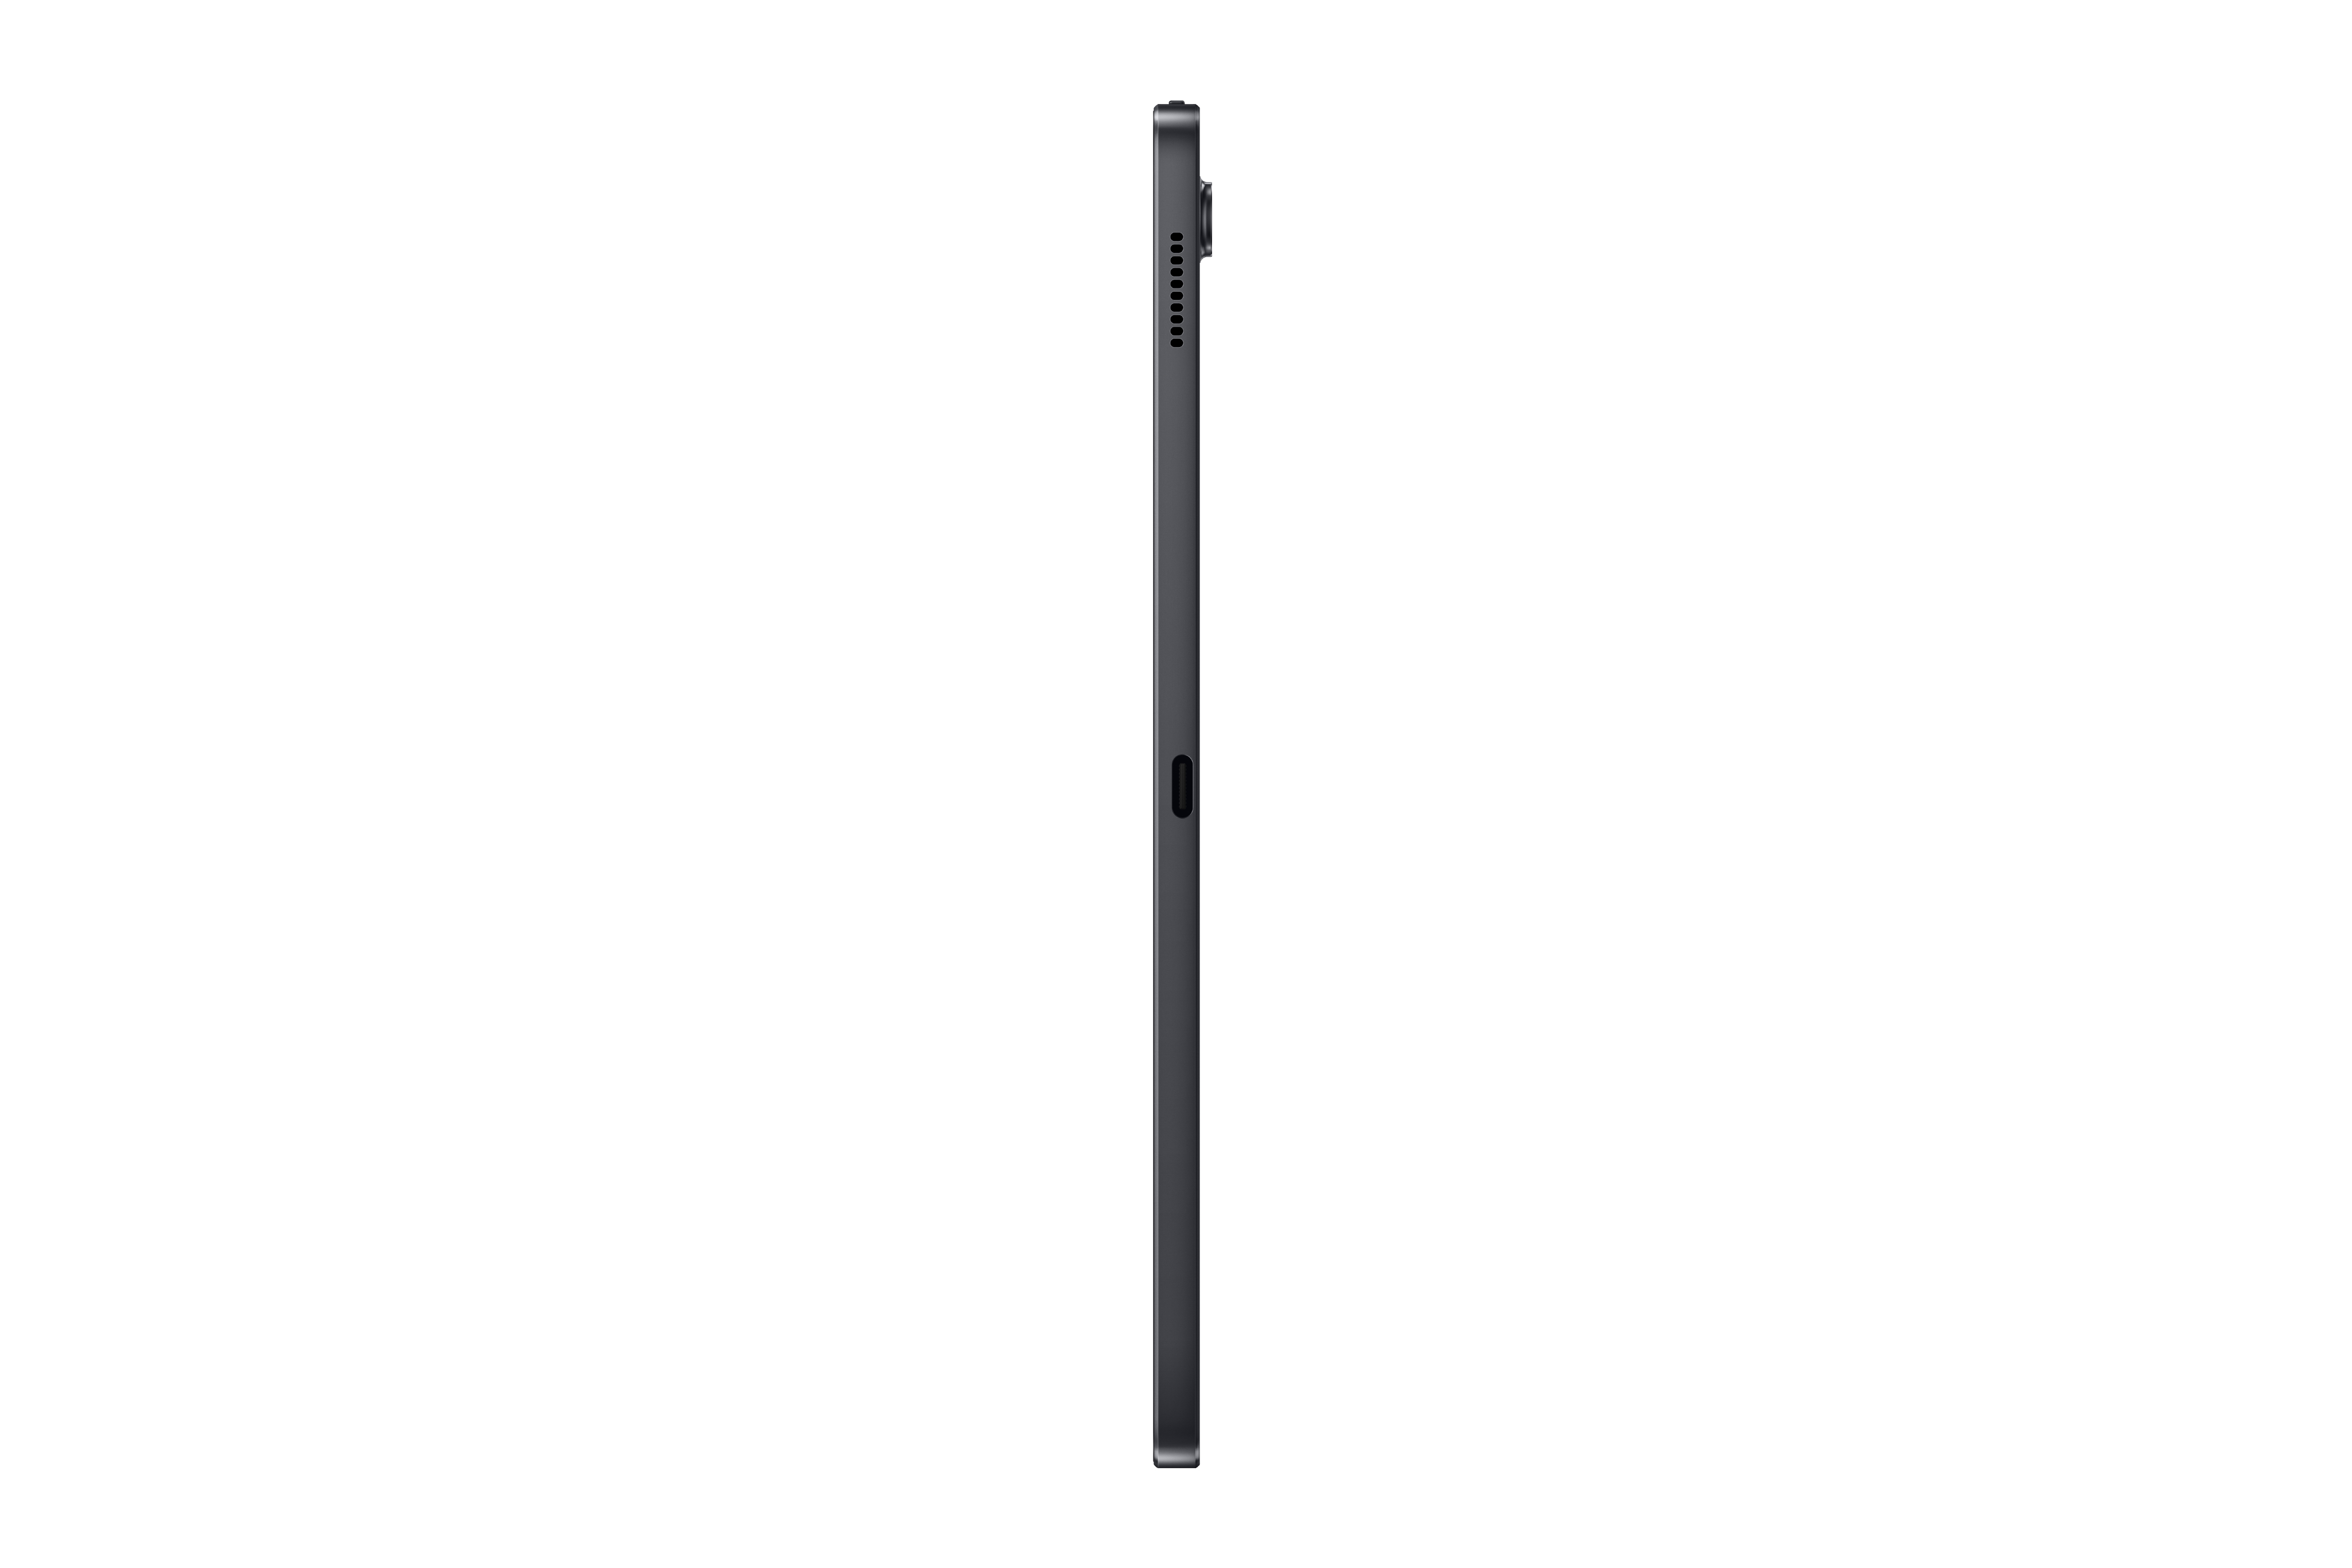 Thumbnail image of Galaxy Tab S7 FE 5G, 64GB, Mystic Black (Verizon)